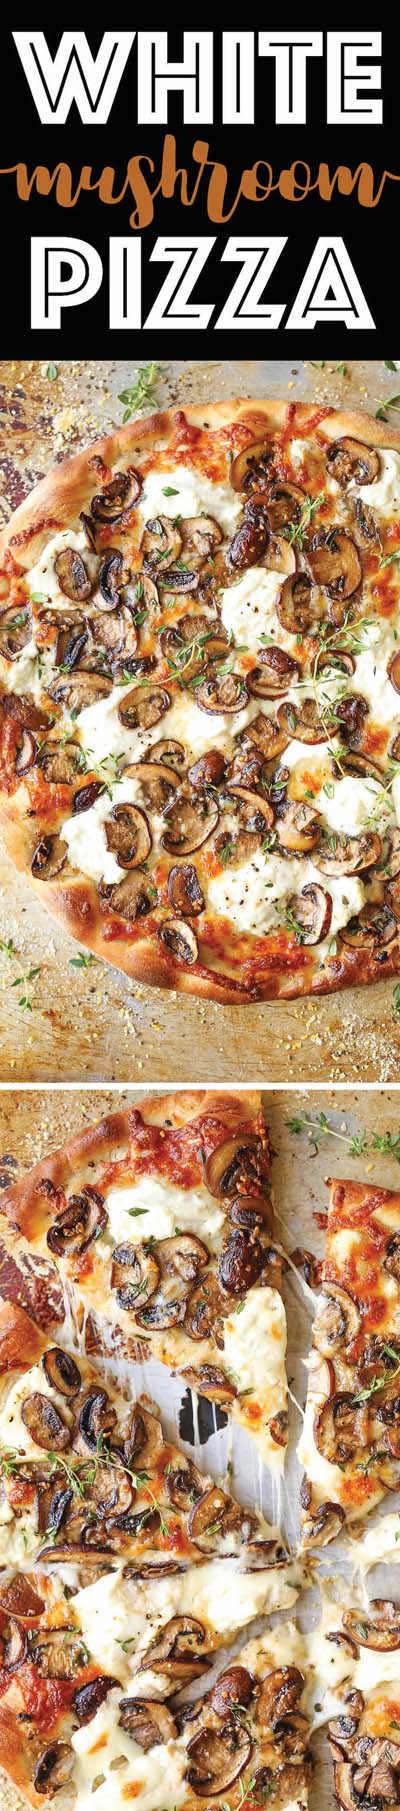 35 Homemade Pizza Recipes: White Mushroom Pizza